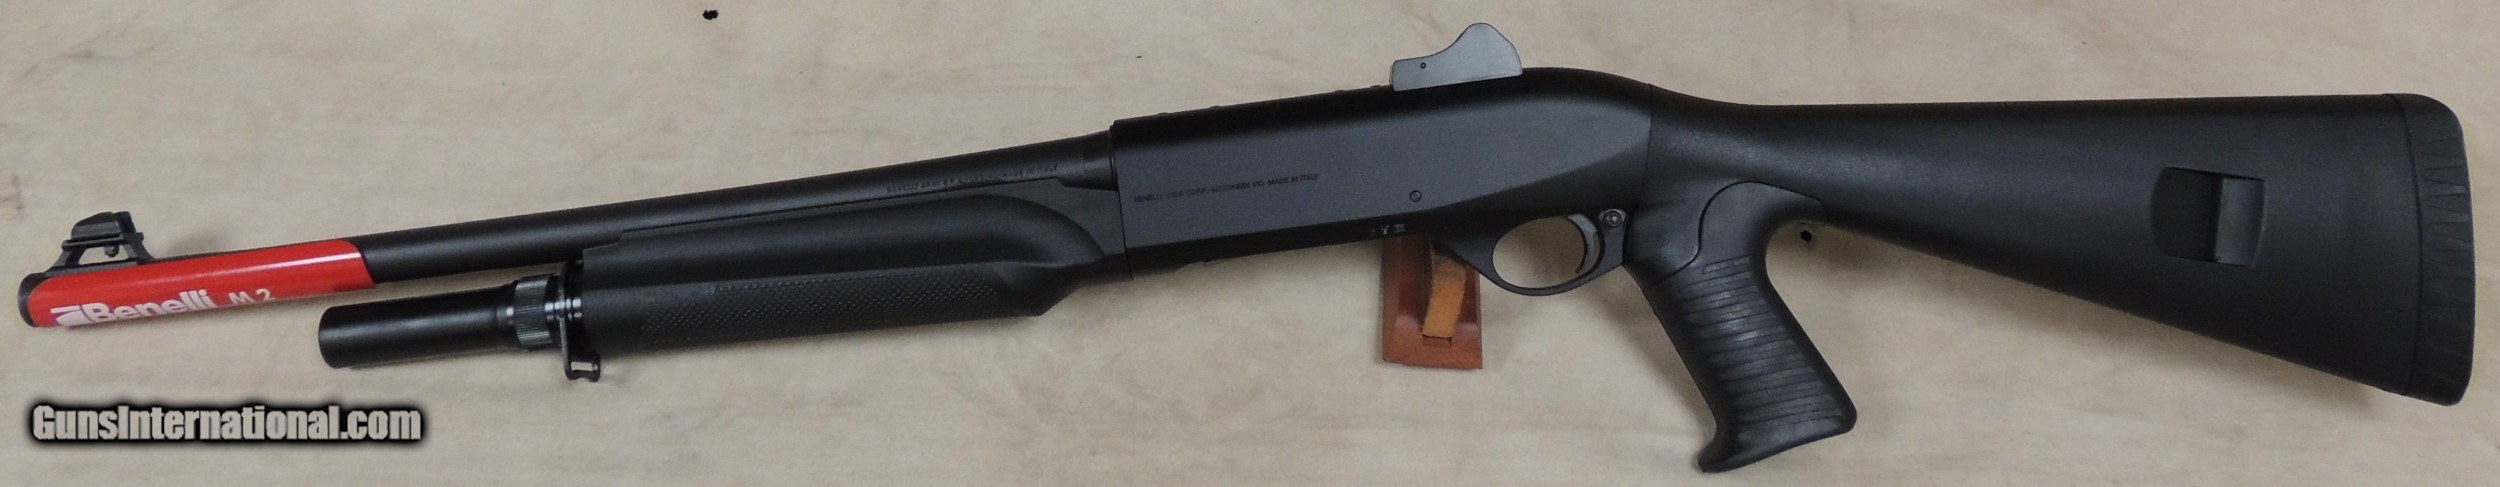 Benelli M2 Tactical 12 Ga Pistol Grip Shotgun Nib Sn M902214a16